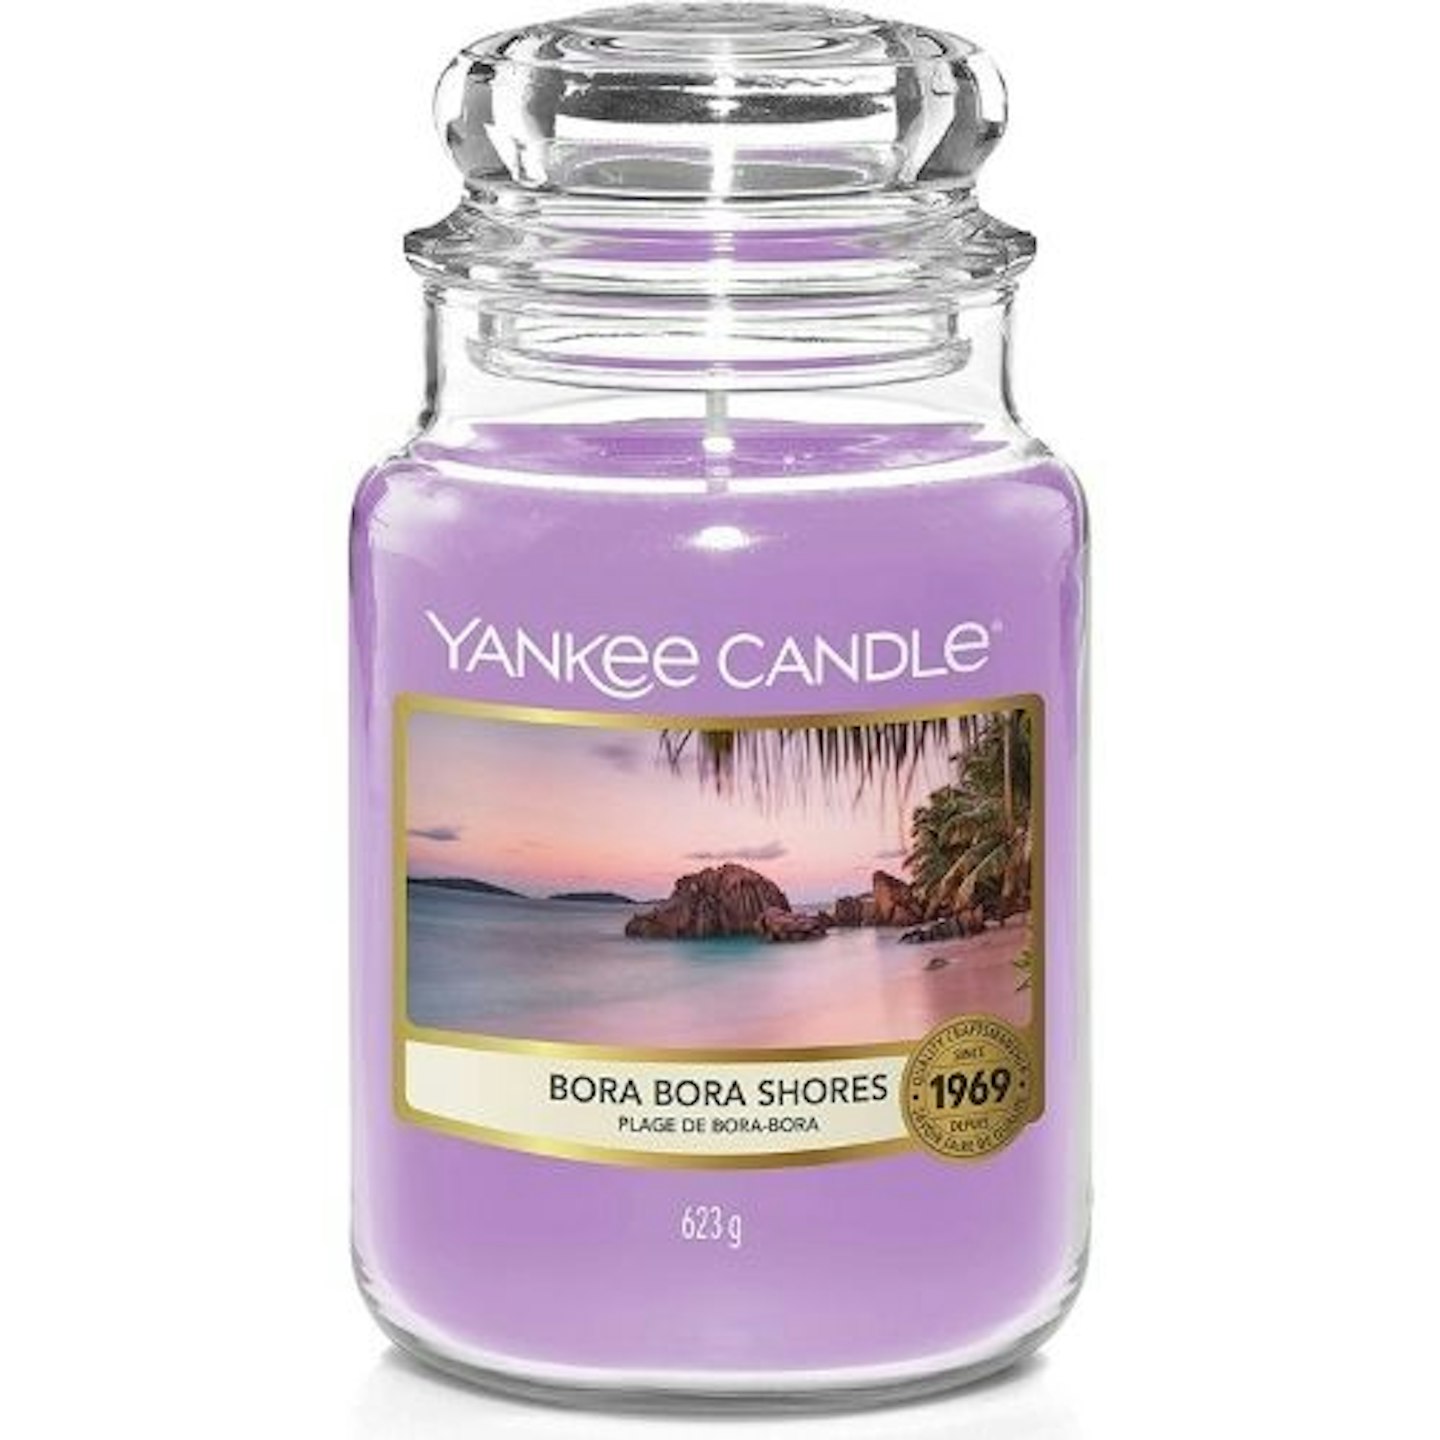 Bora Bora Shores Large Jar Candle